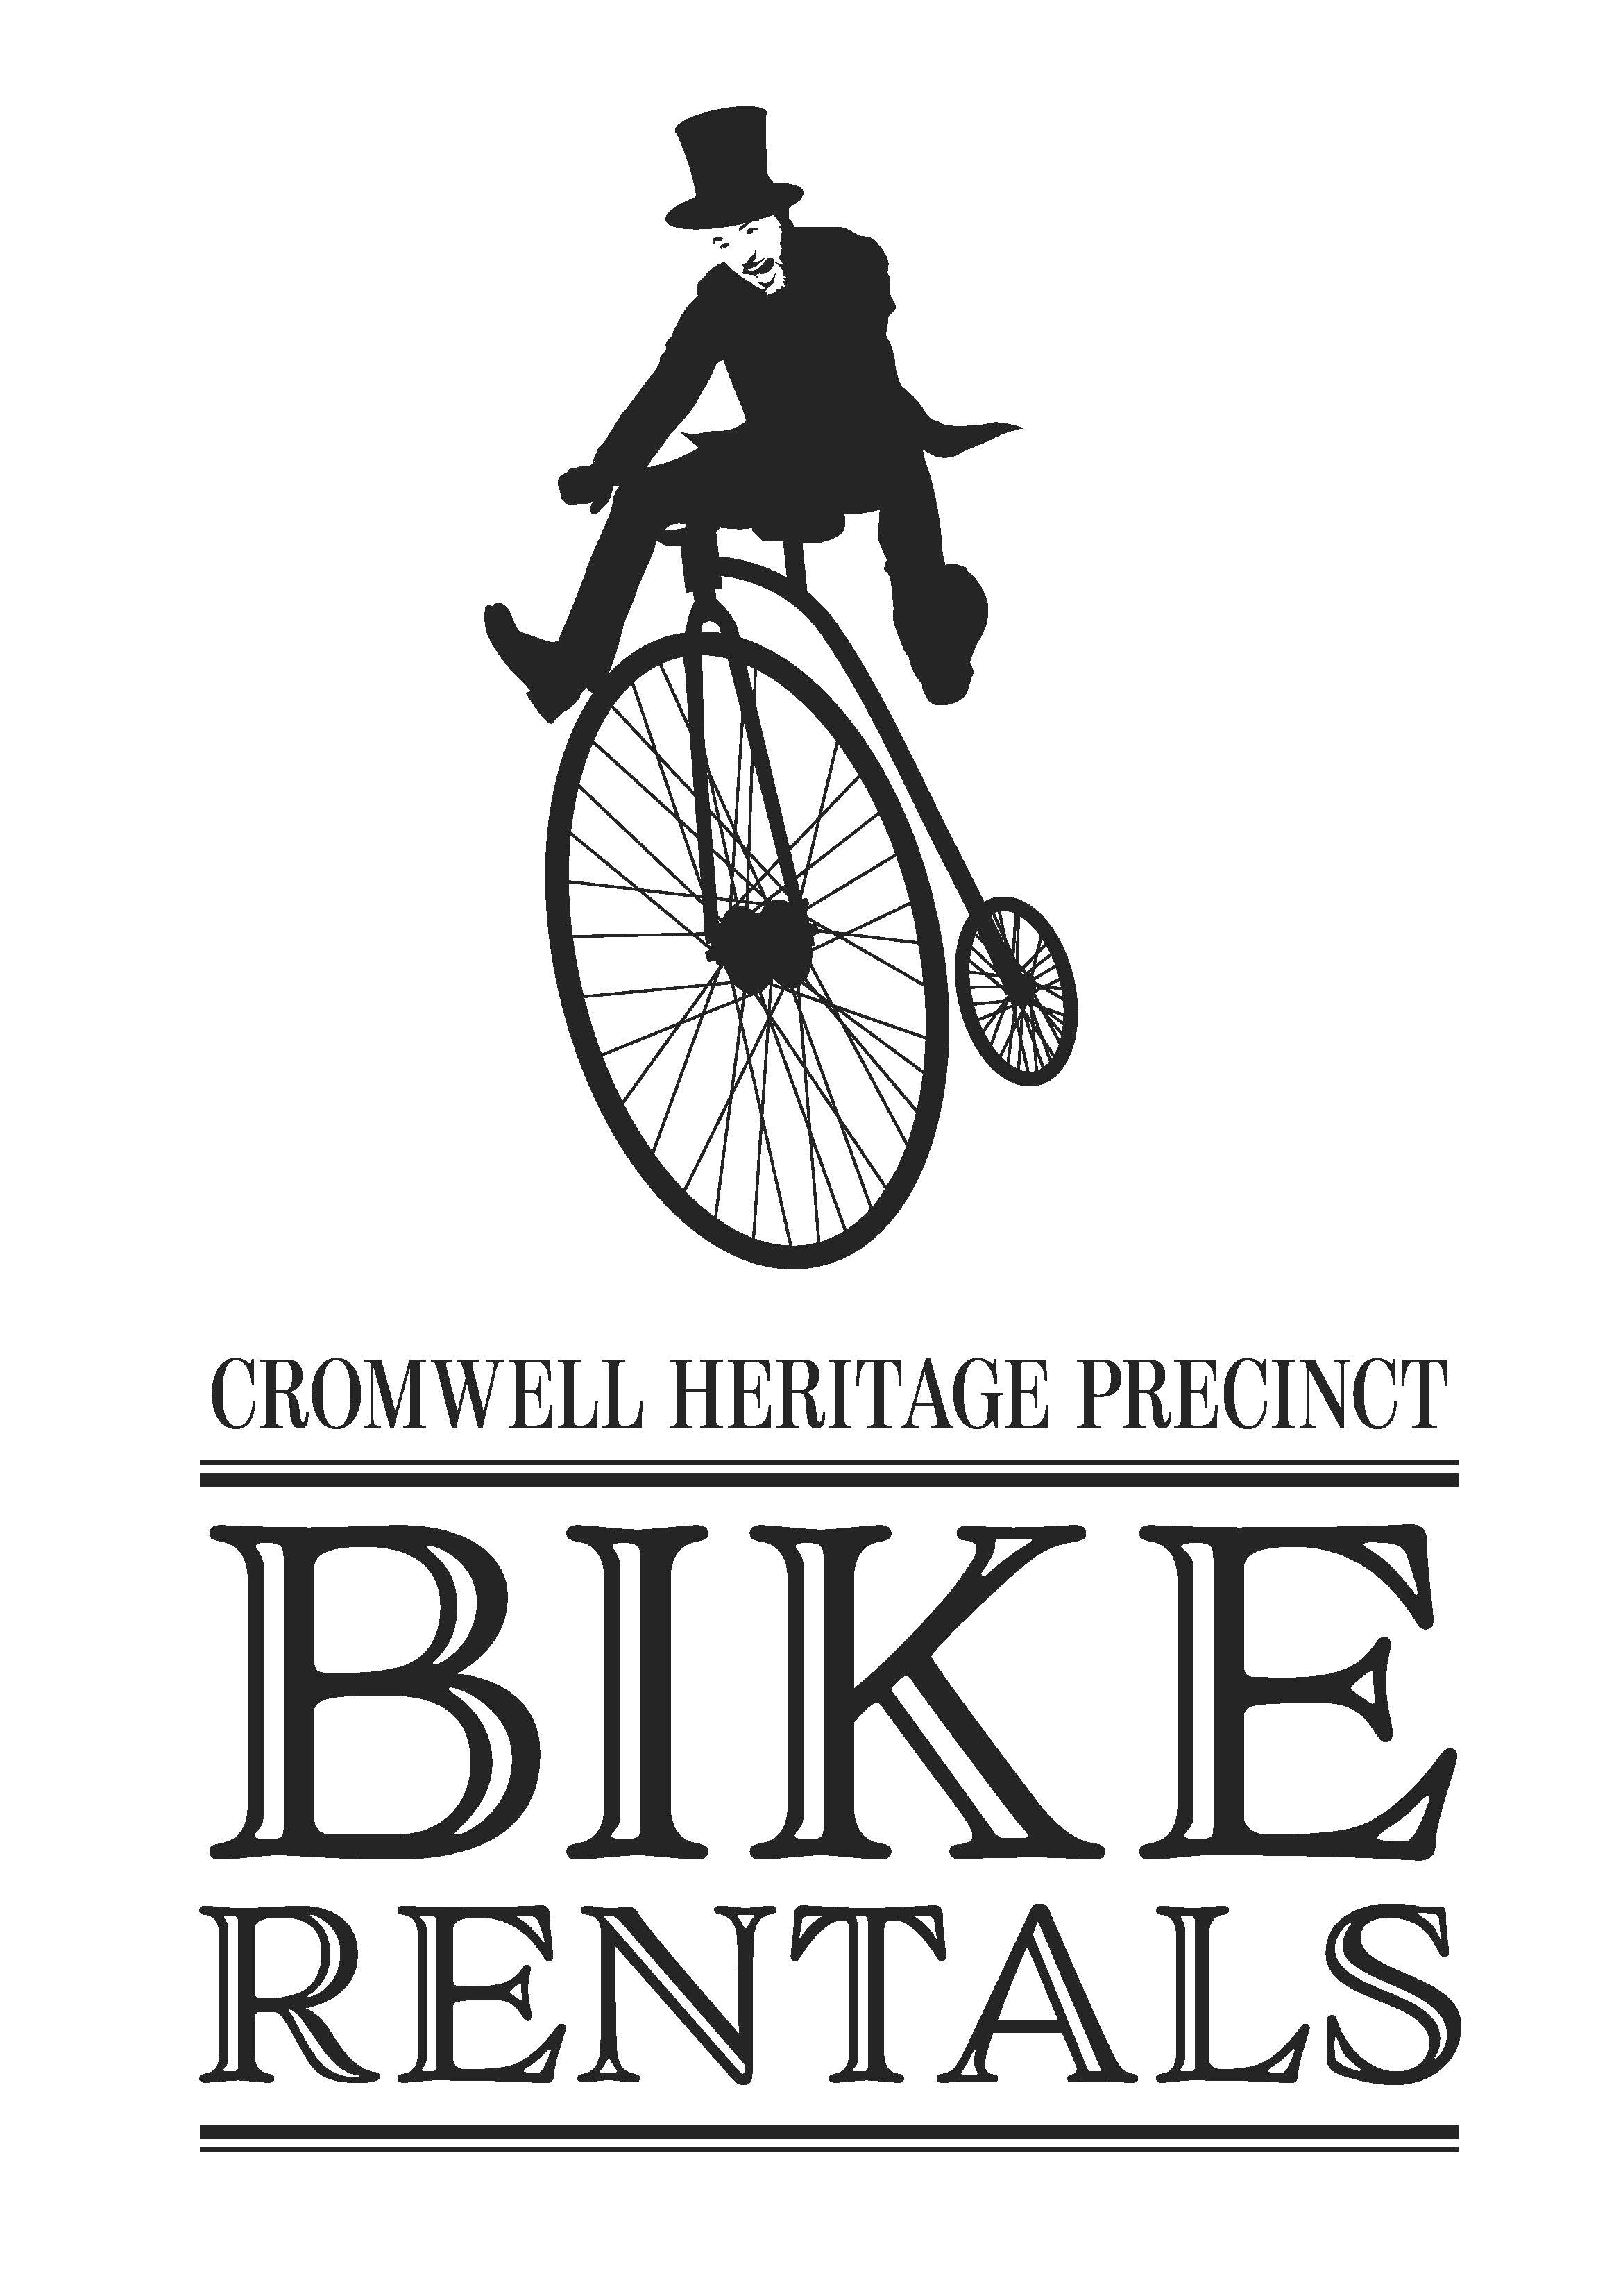 
Cromwell Heritage Precinct Bike Rentals